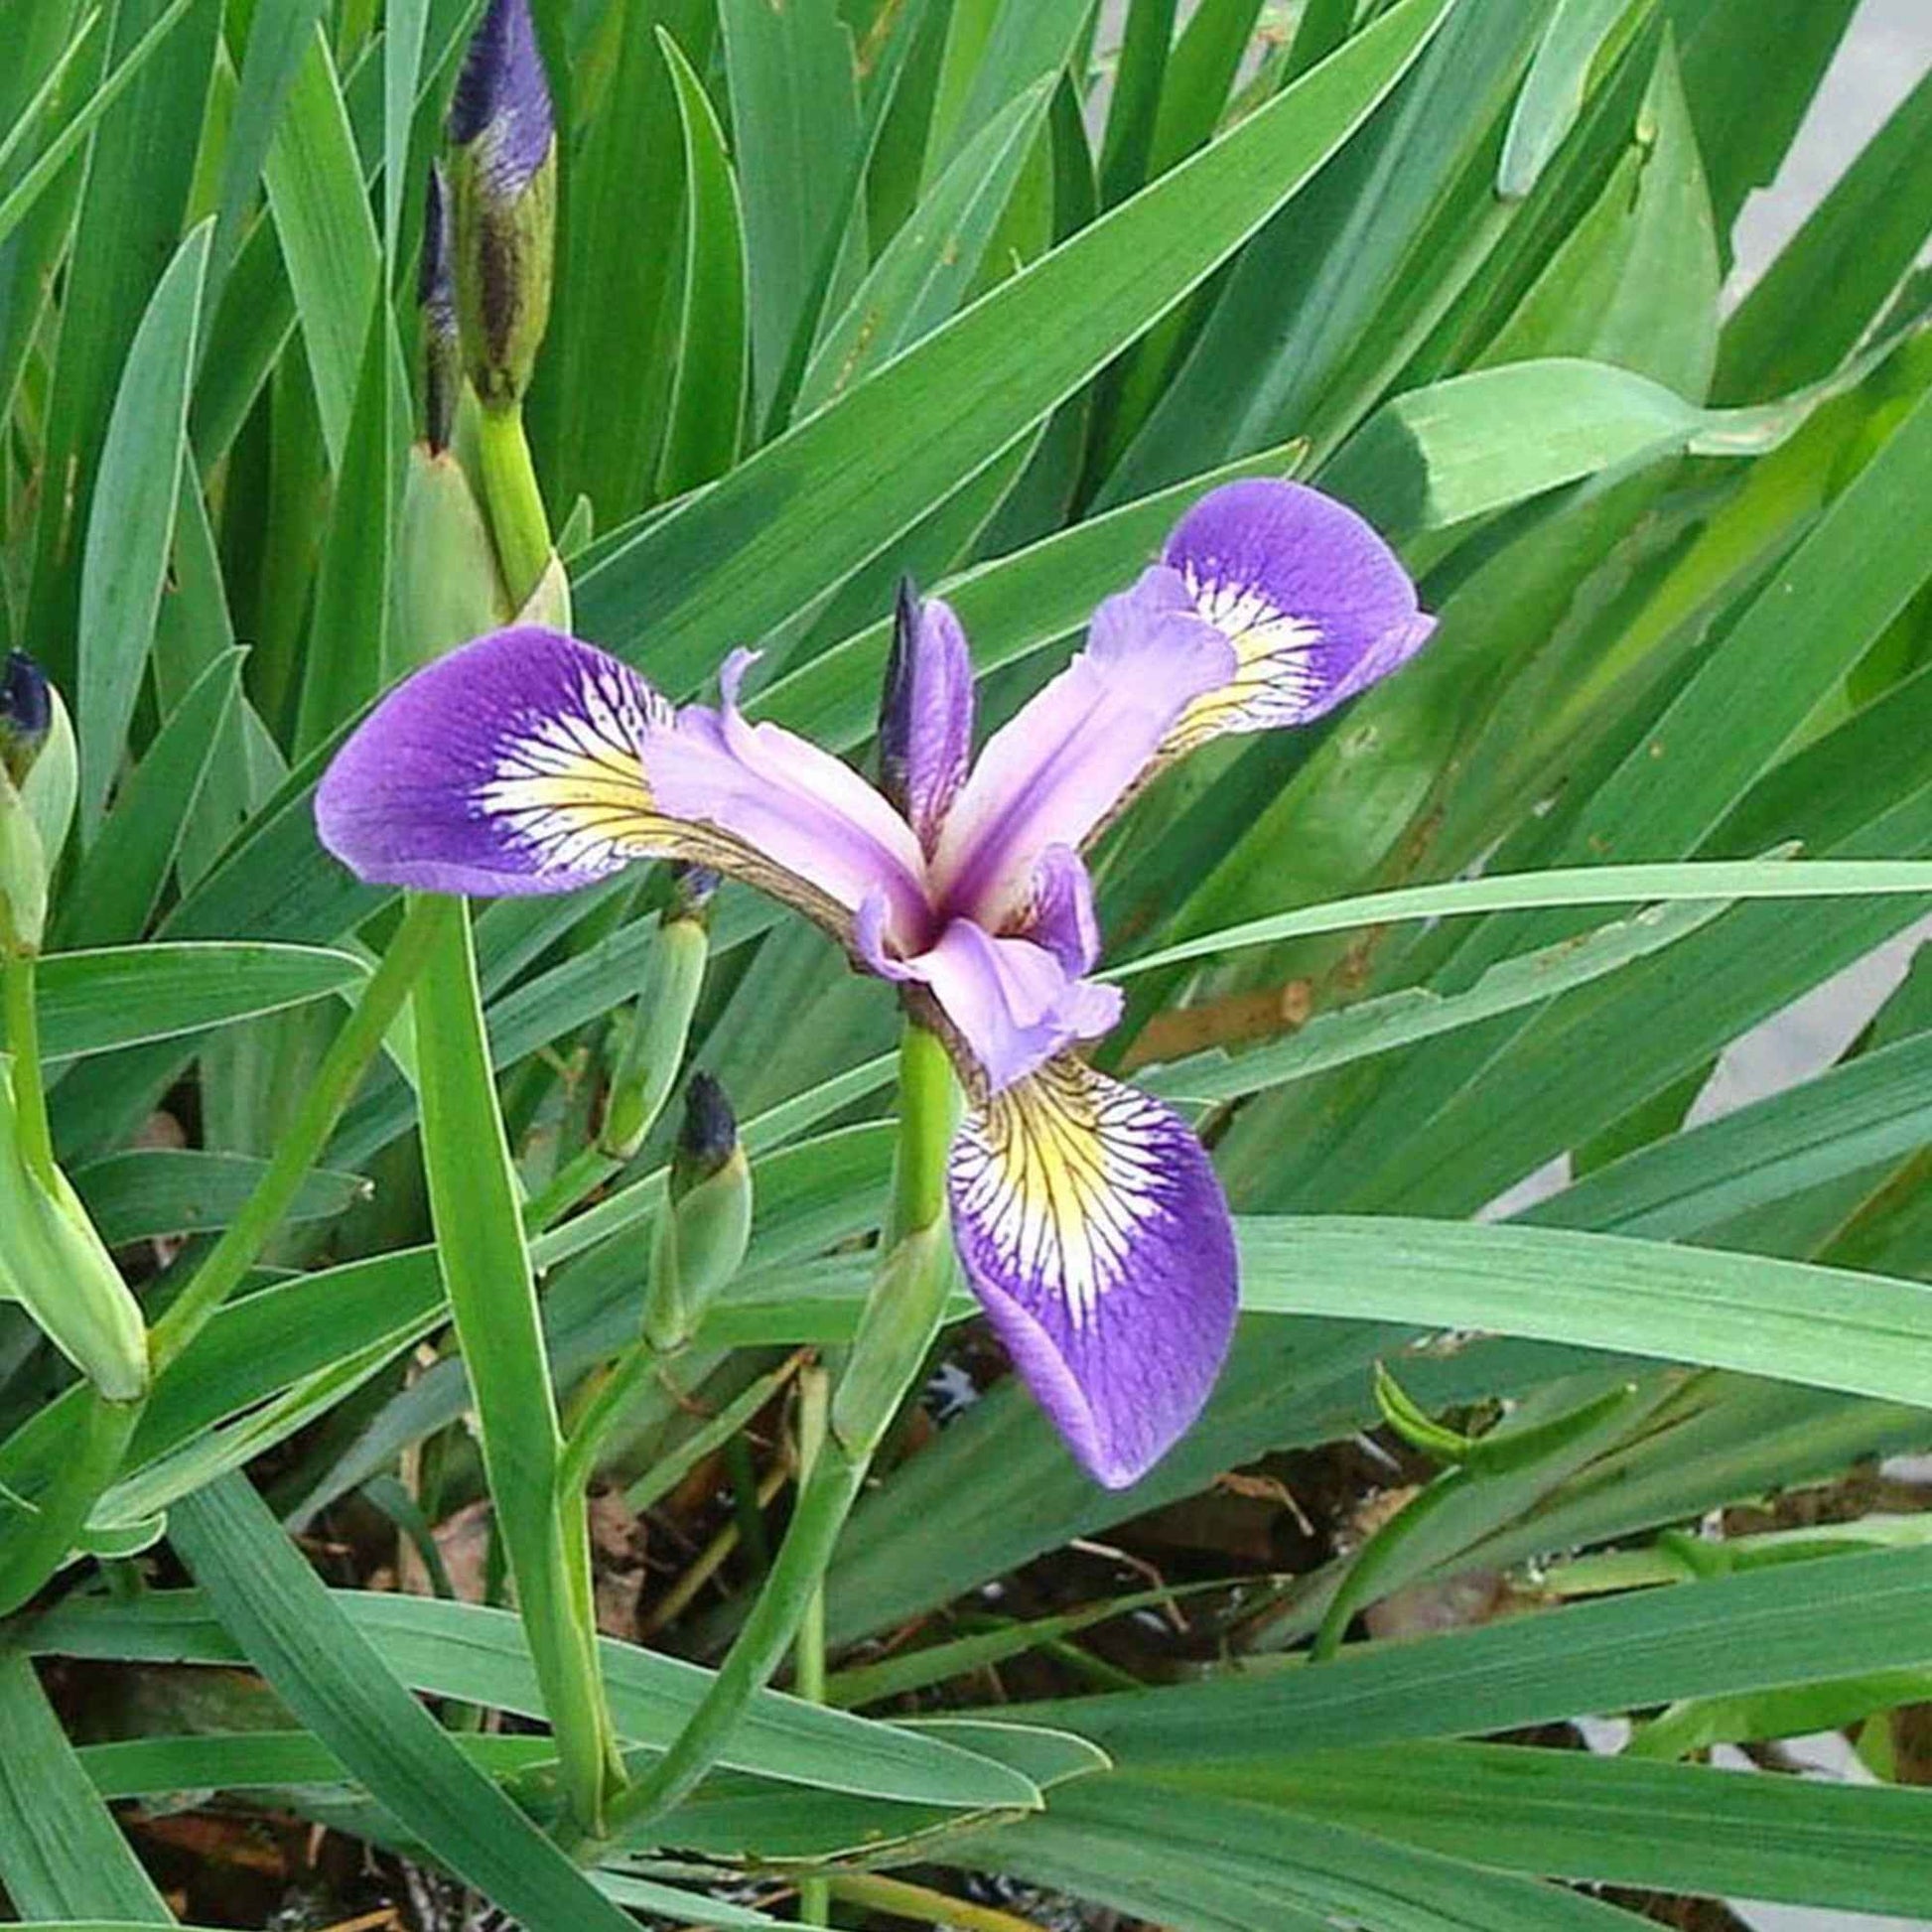 Amerikaanse lis - Iris versicolor - Vijvers